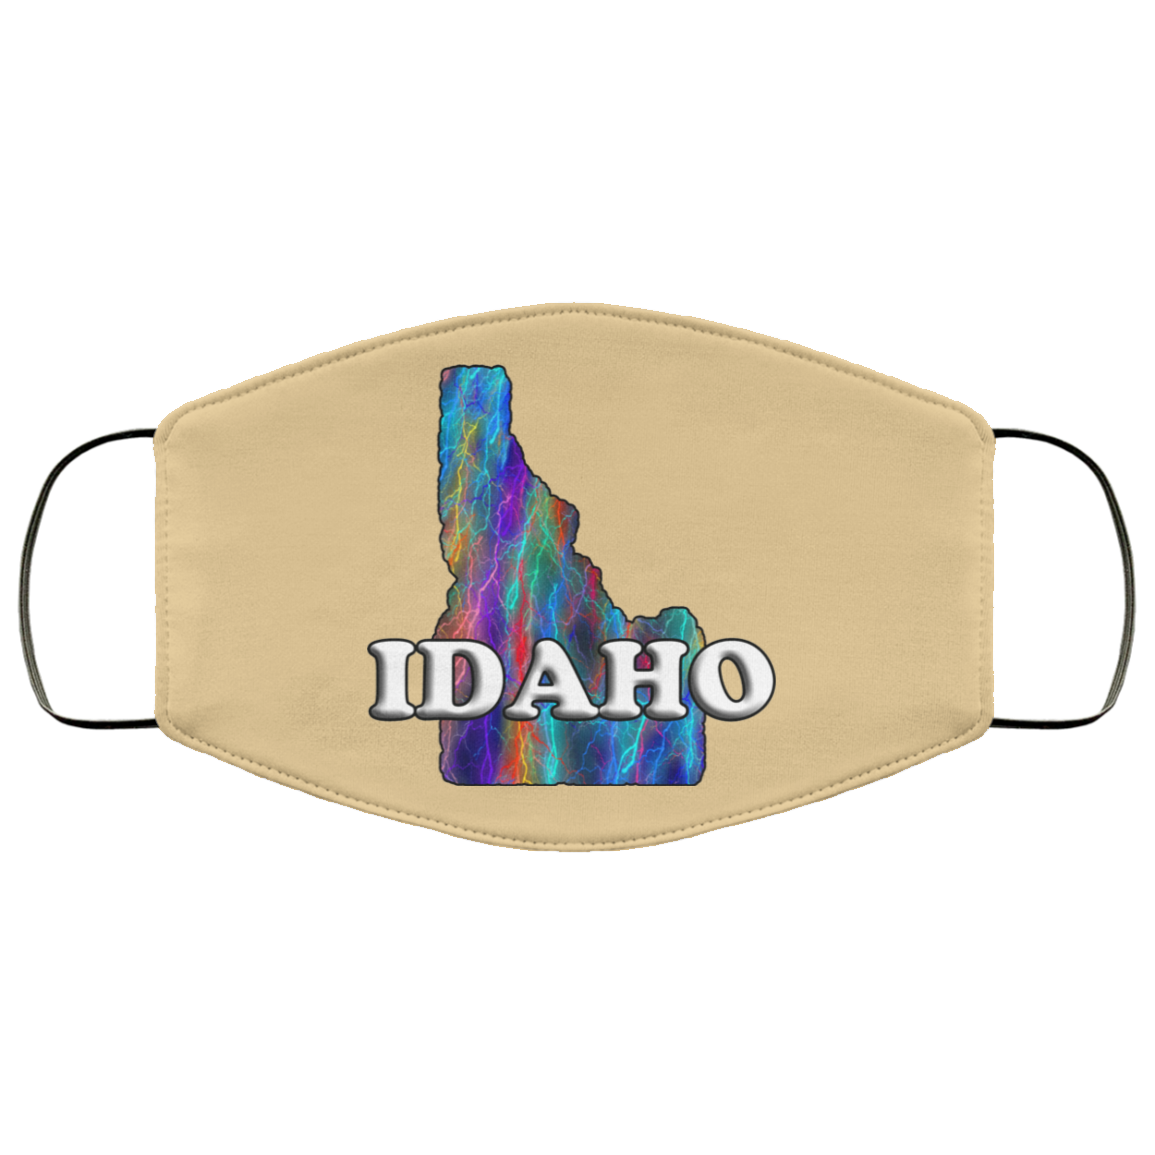 Idaho 2 Layer Protective Face Mask